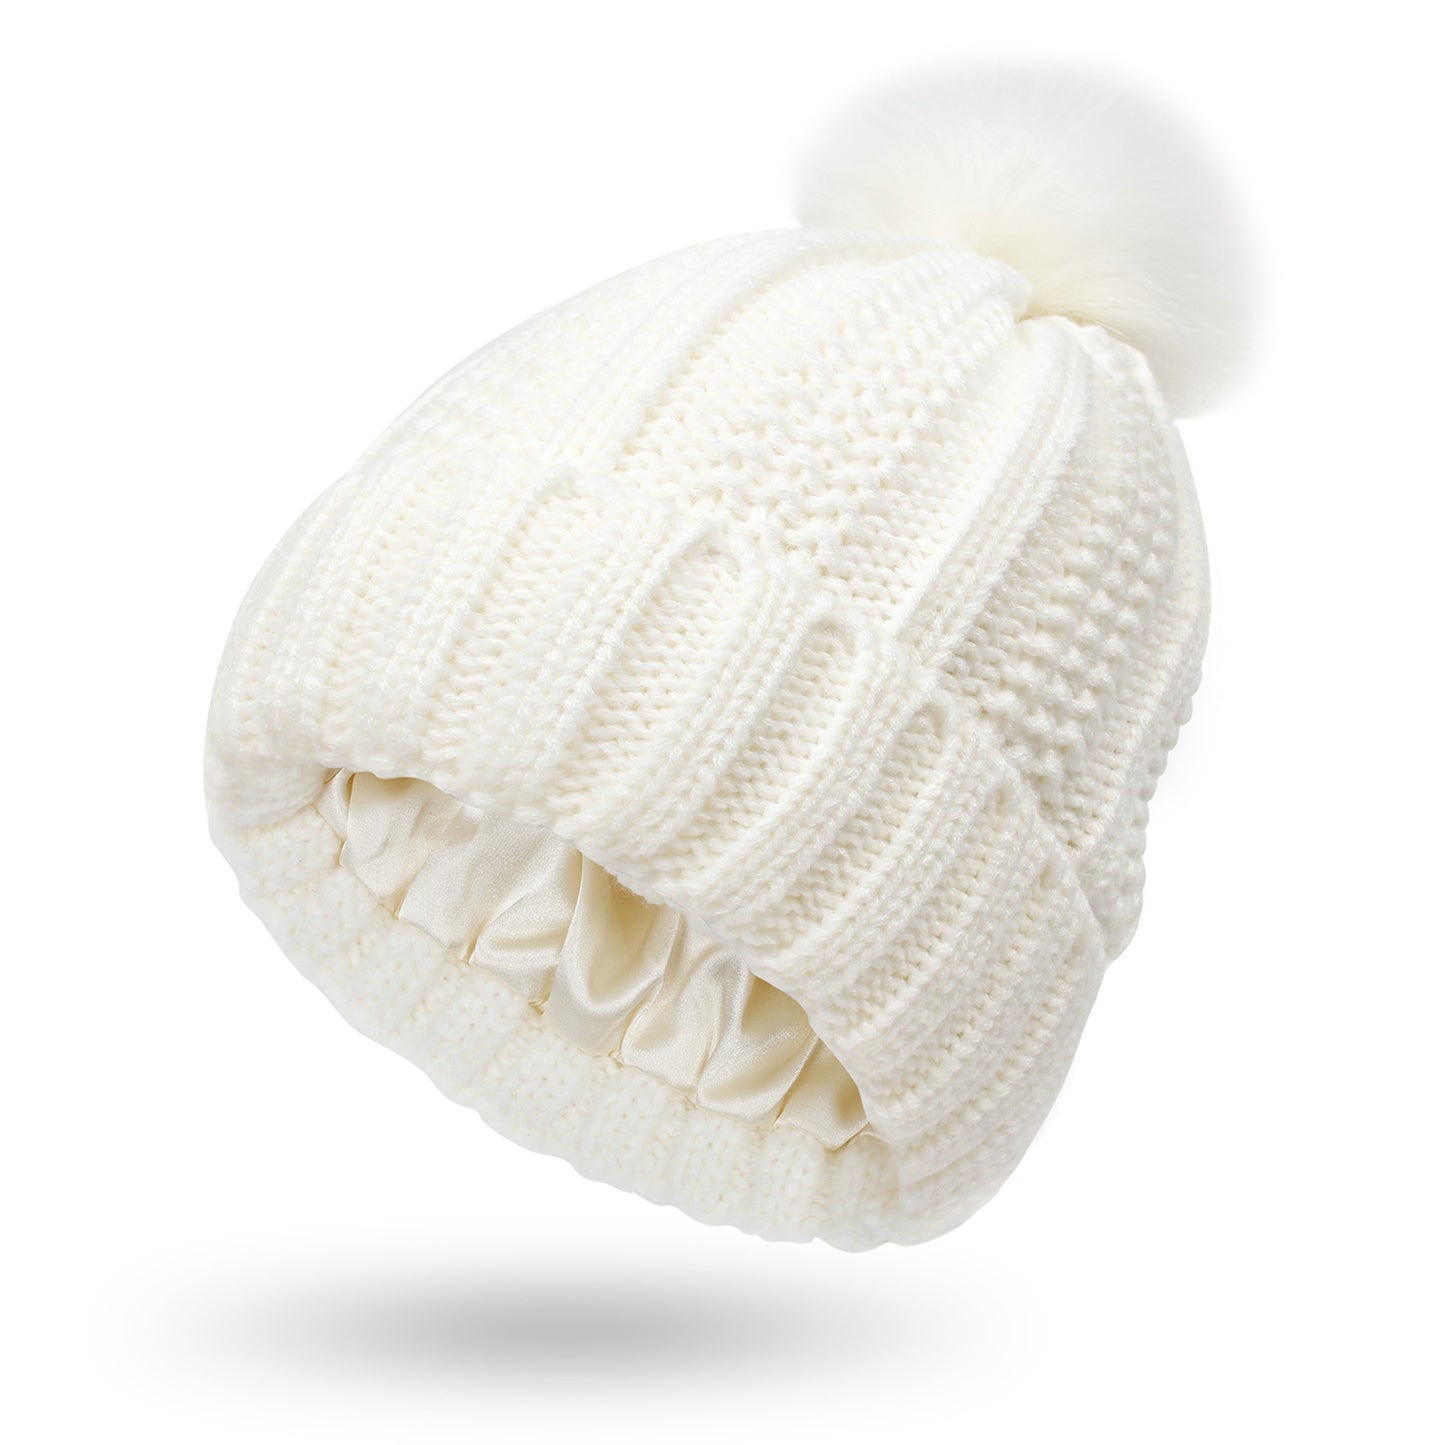 Stylish Satin-Lined Skull Knit Beanie with Faux Fur Pom Pom - Winter Warming Hat for Women